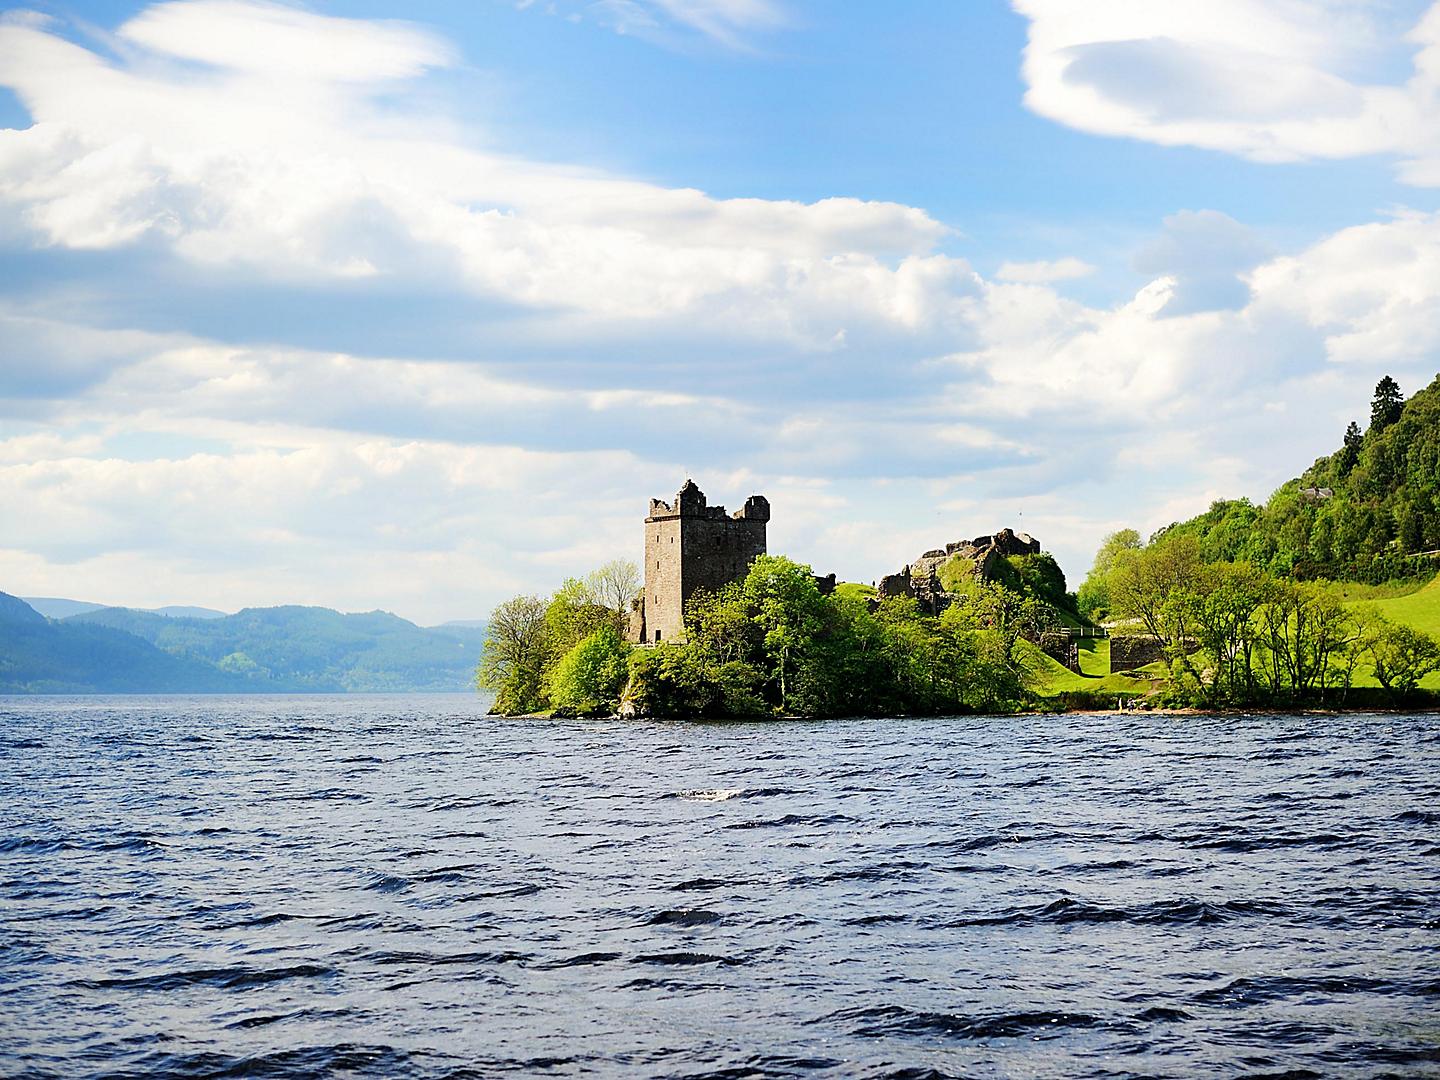 Inverness / Loch Ness, Scotland, Urquhart Castle